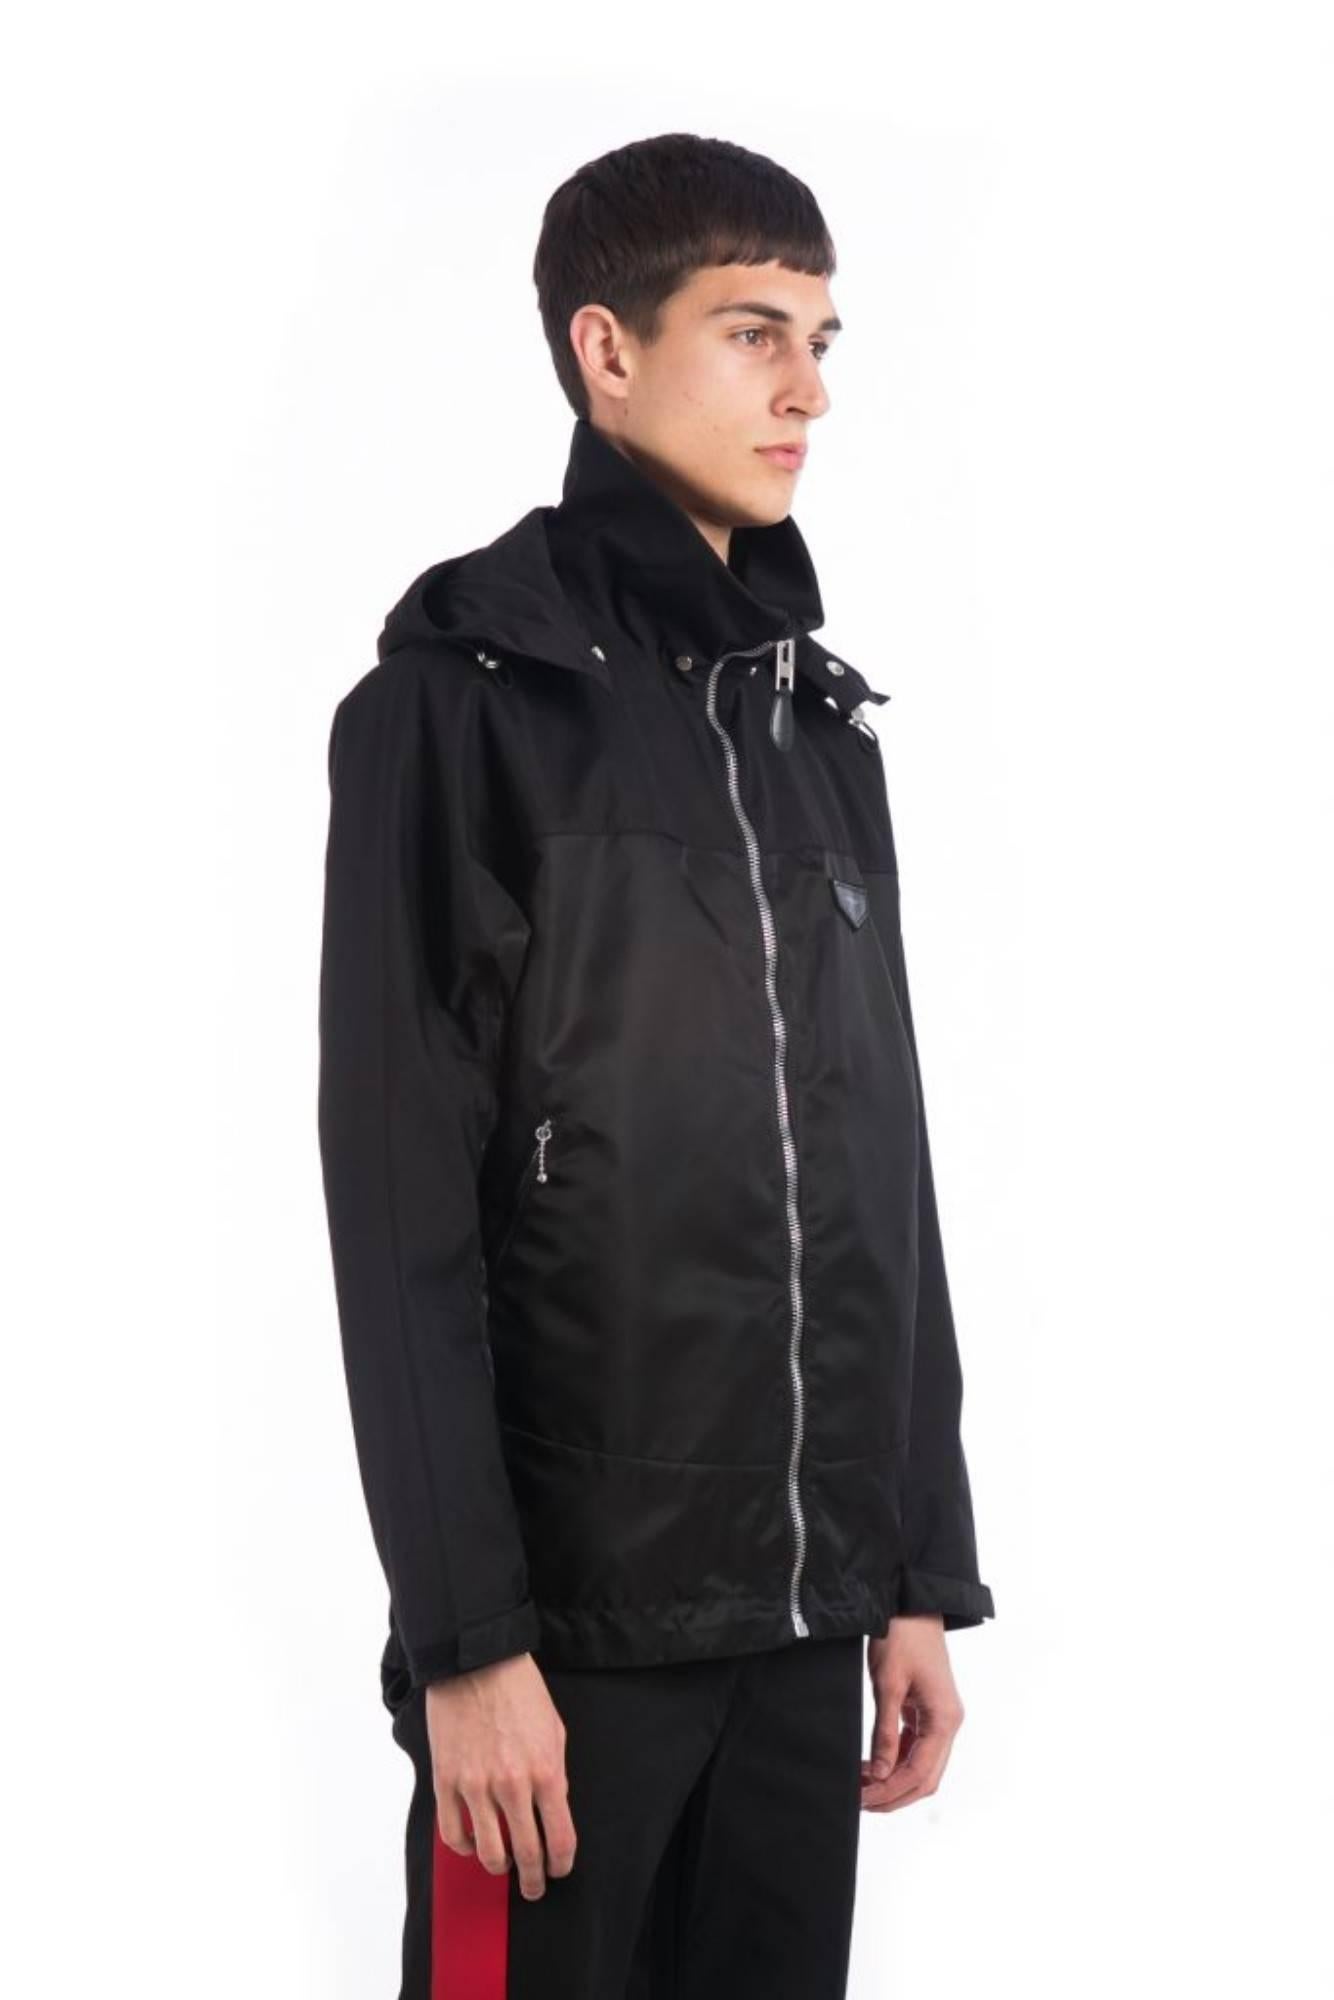 Zip Jacket
Black zip jacket
Front zip fastening
Front logo plaque
Drawstring hood
Straight hem
Long sleeves
100% cotton